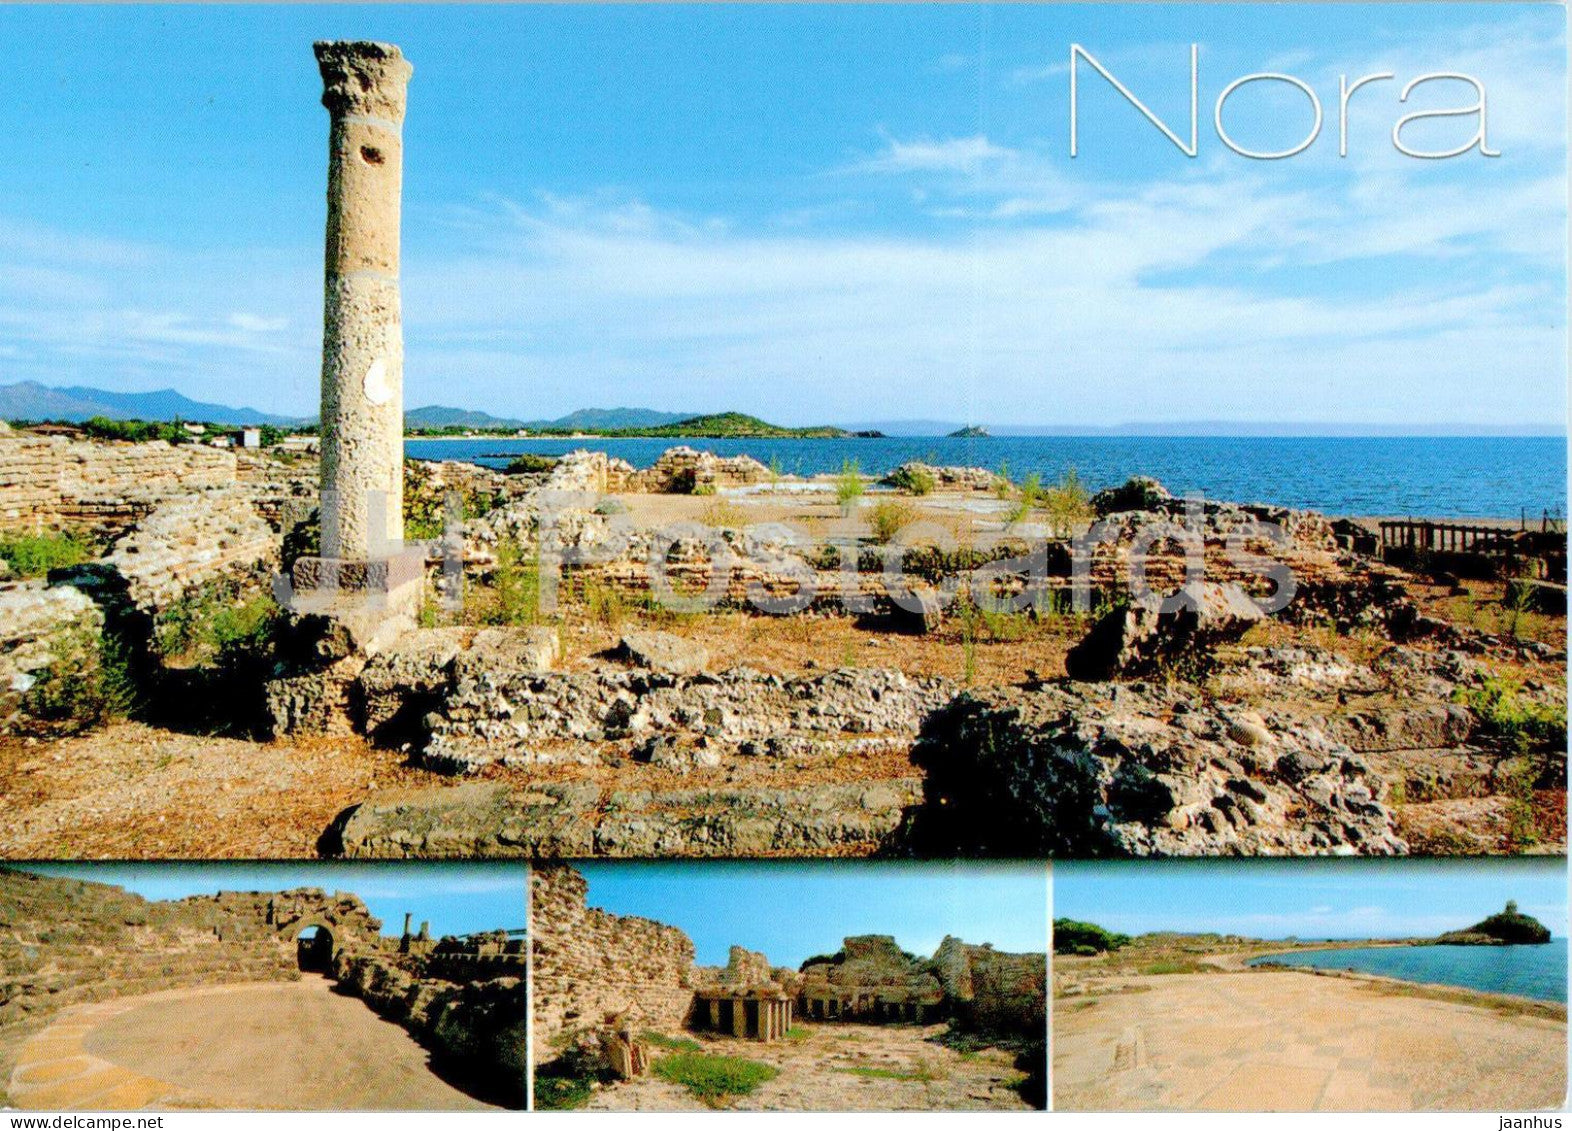 Sardegna - Nora - ancient world - 2009 - Italy - used - JH Postcards